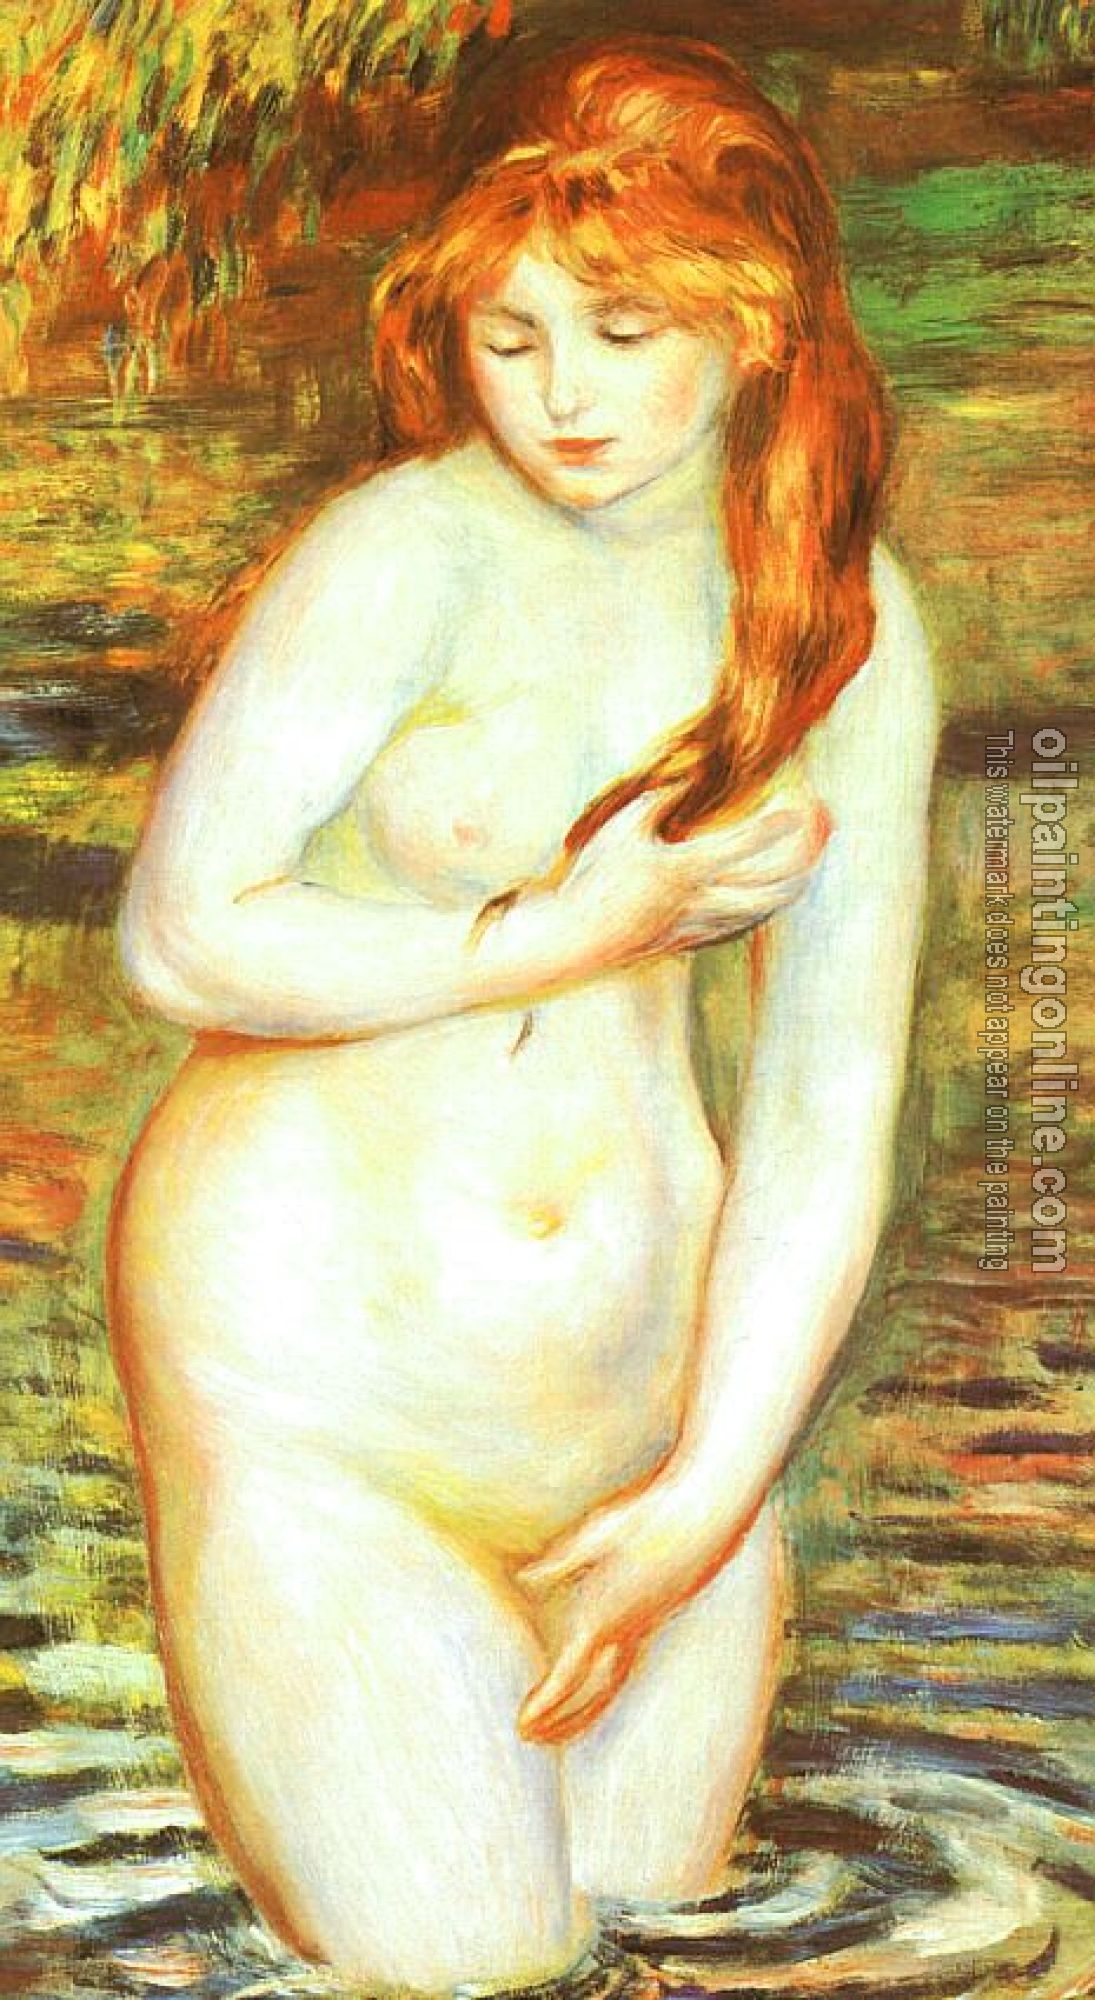 Renoir, Pierre Auguste - The Bather(After the Bath)